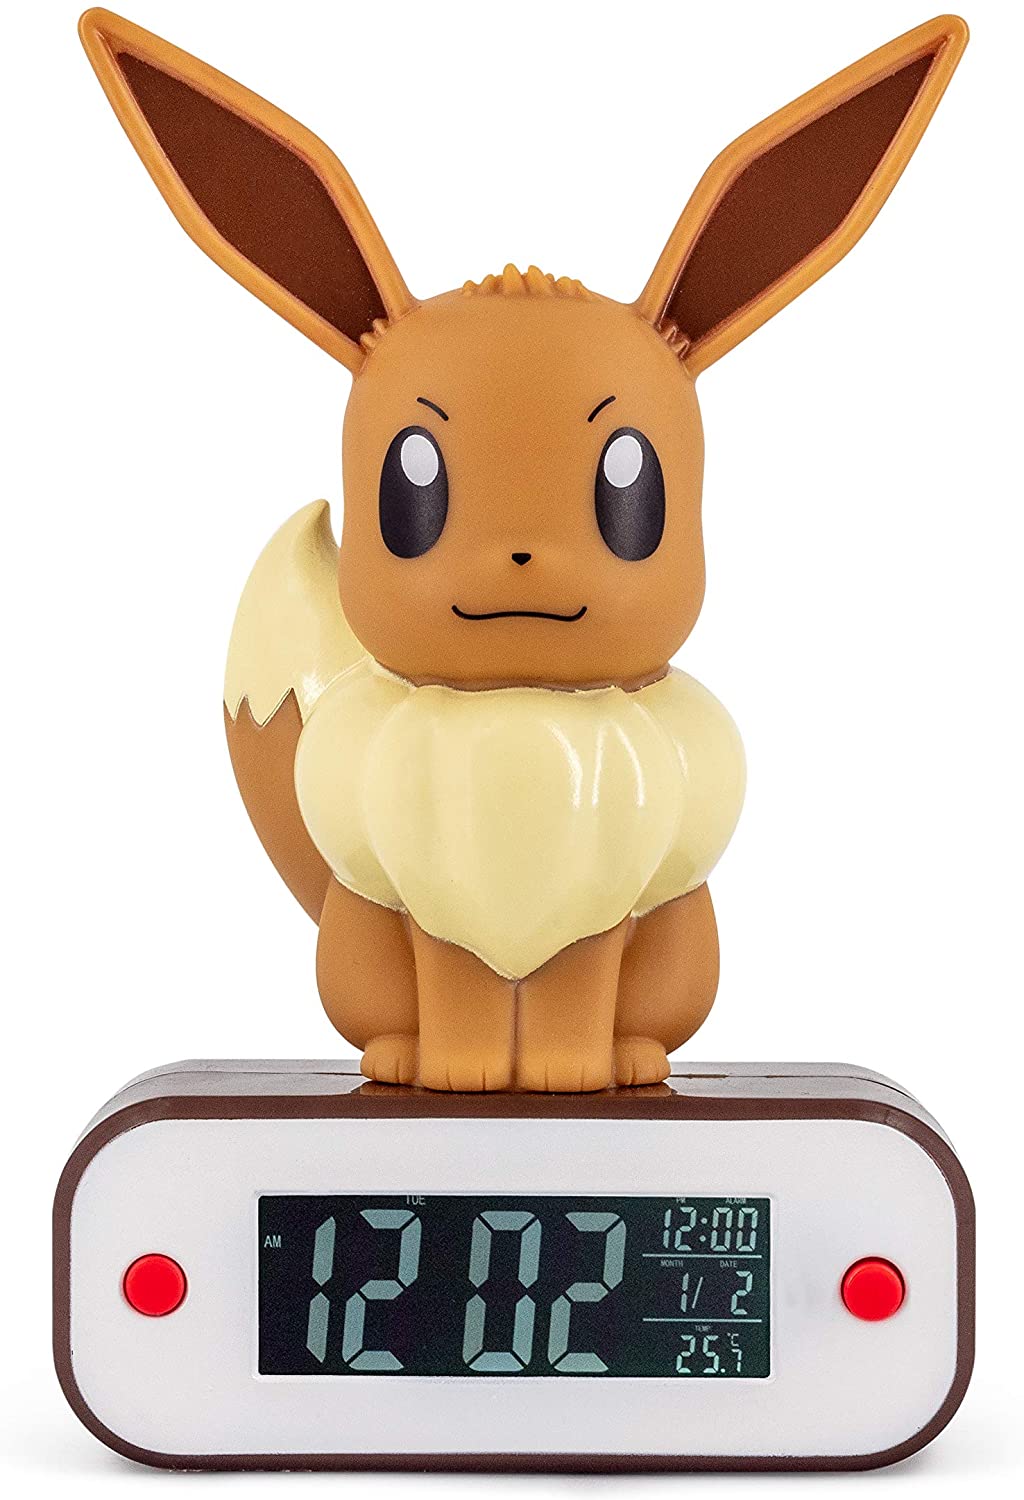 TEKNOFUN 811370 Pokemon Eevee 3D Pokemon Alarm Clock and Lamp, Brown, 18